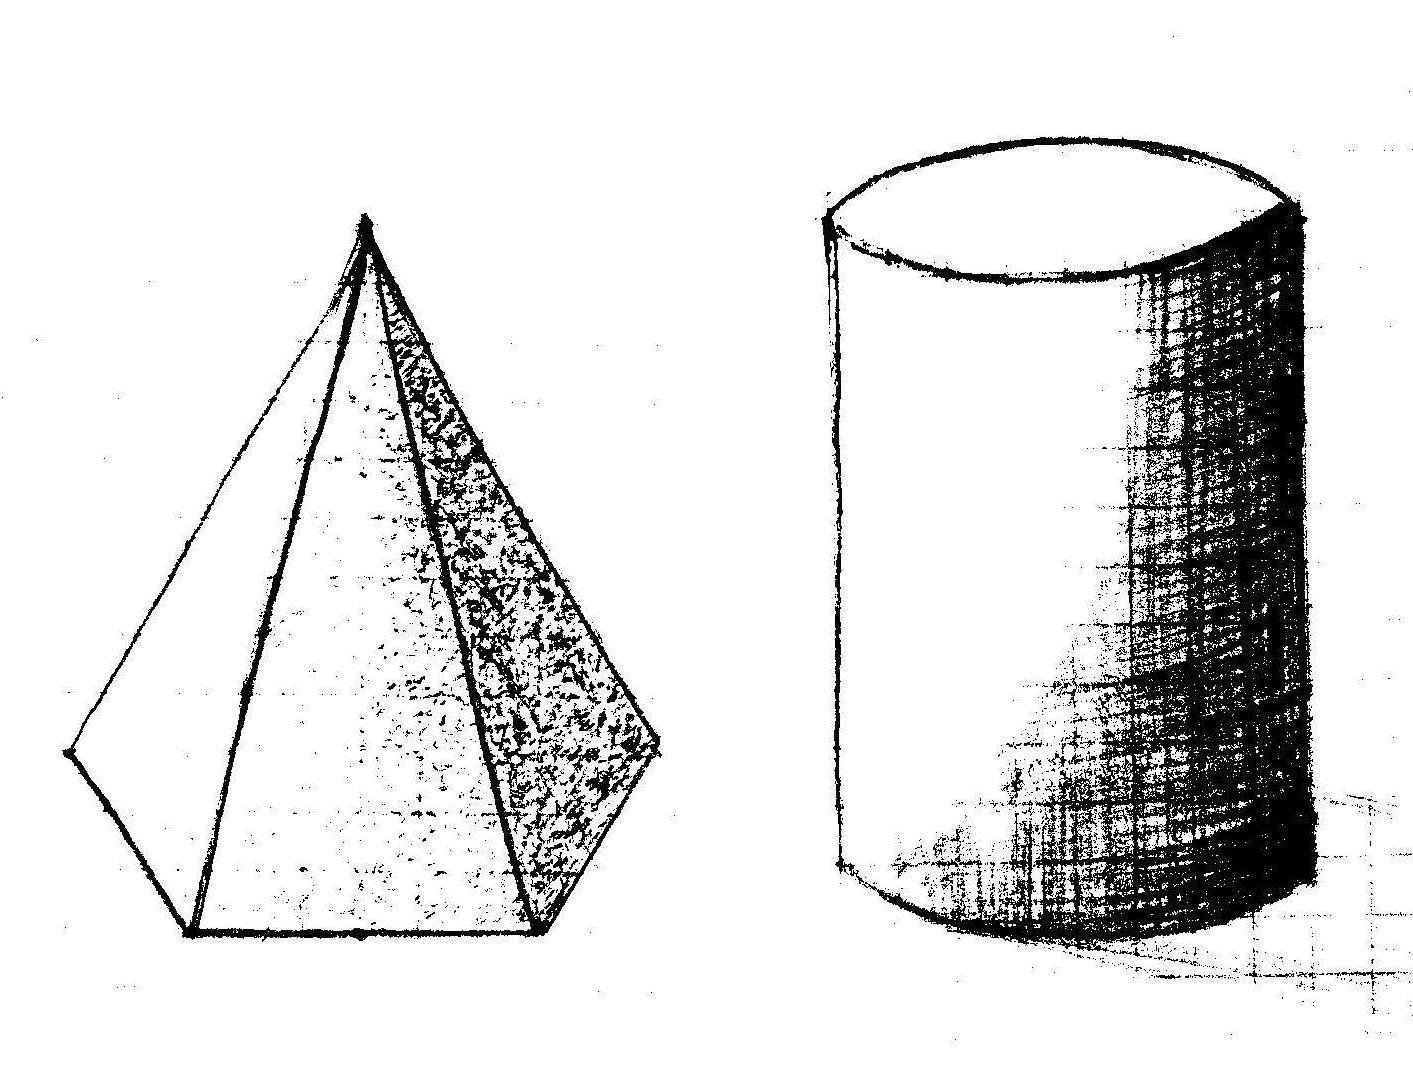 параллелепипед пирамида конус